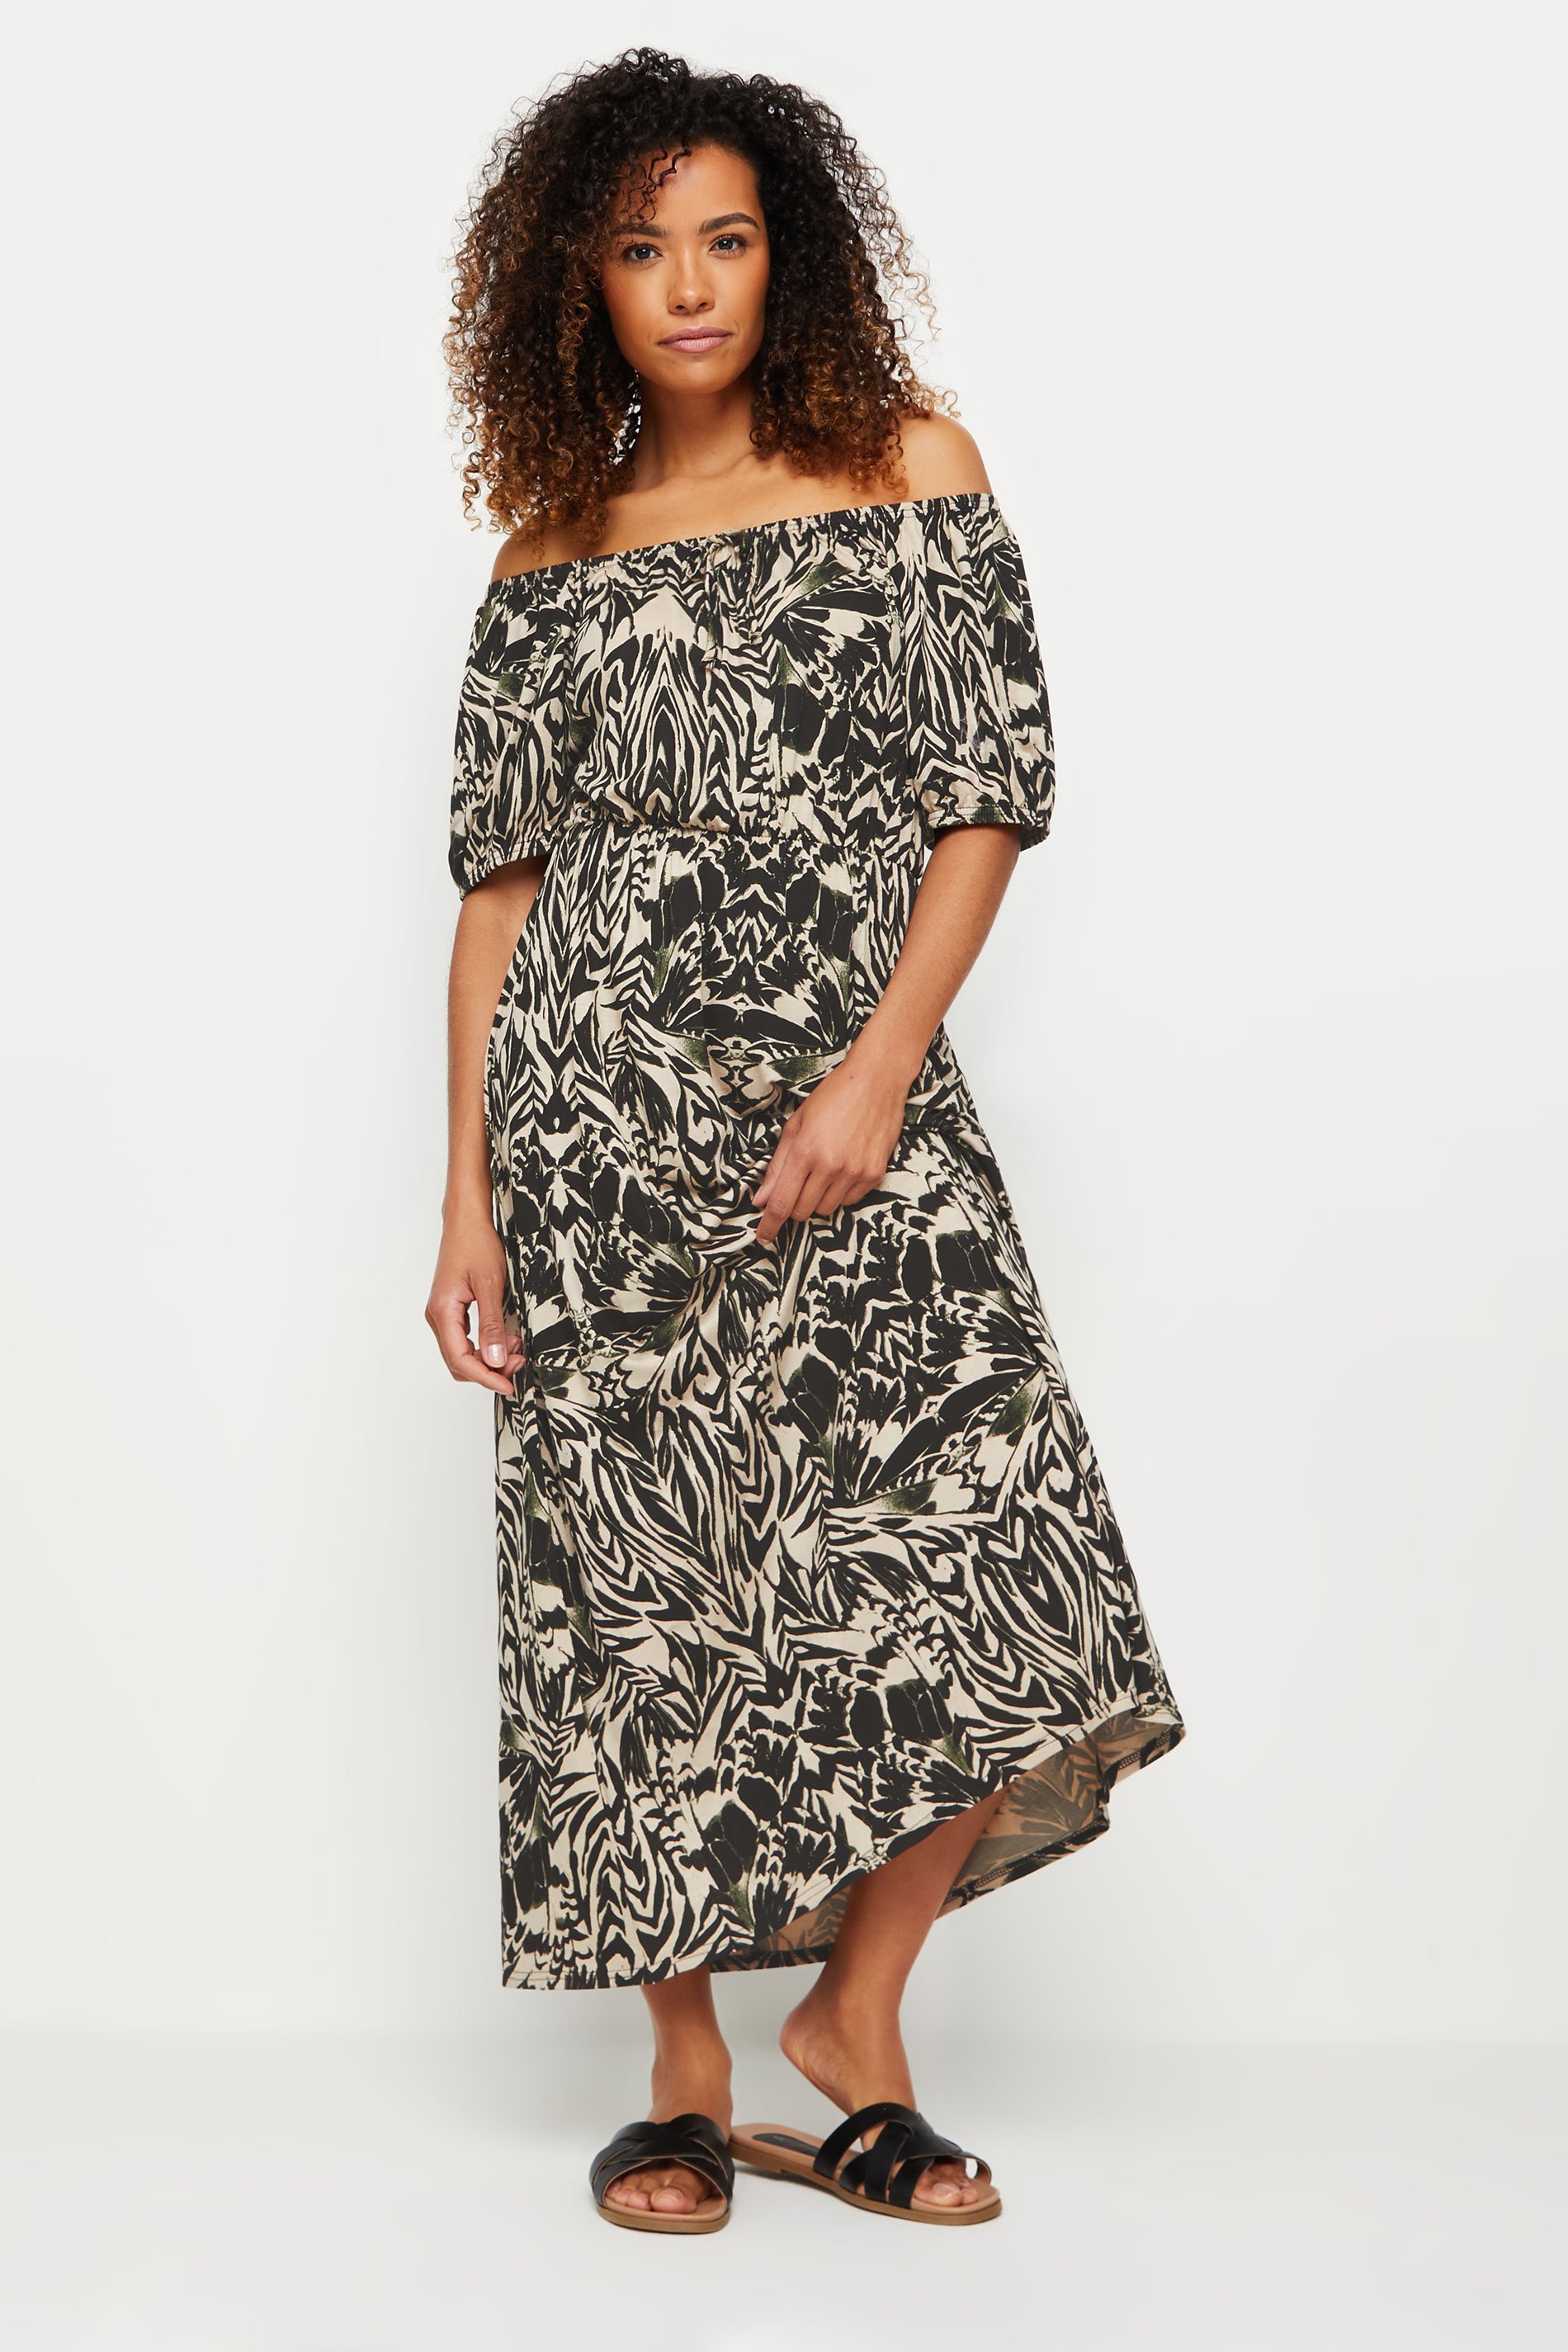 M&Co Neutral Brown & Black Abstract Print Bardot Dress 2